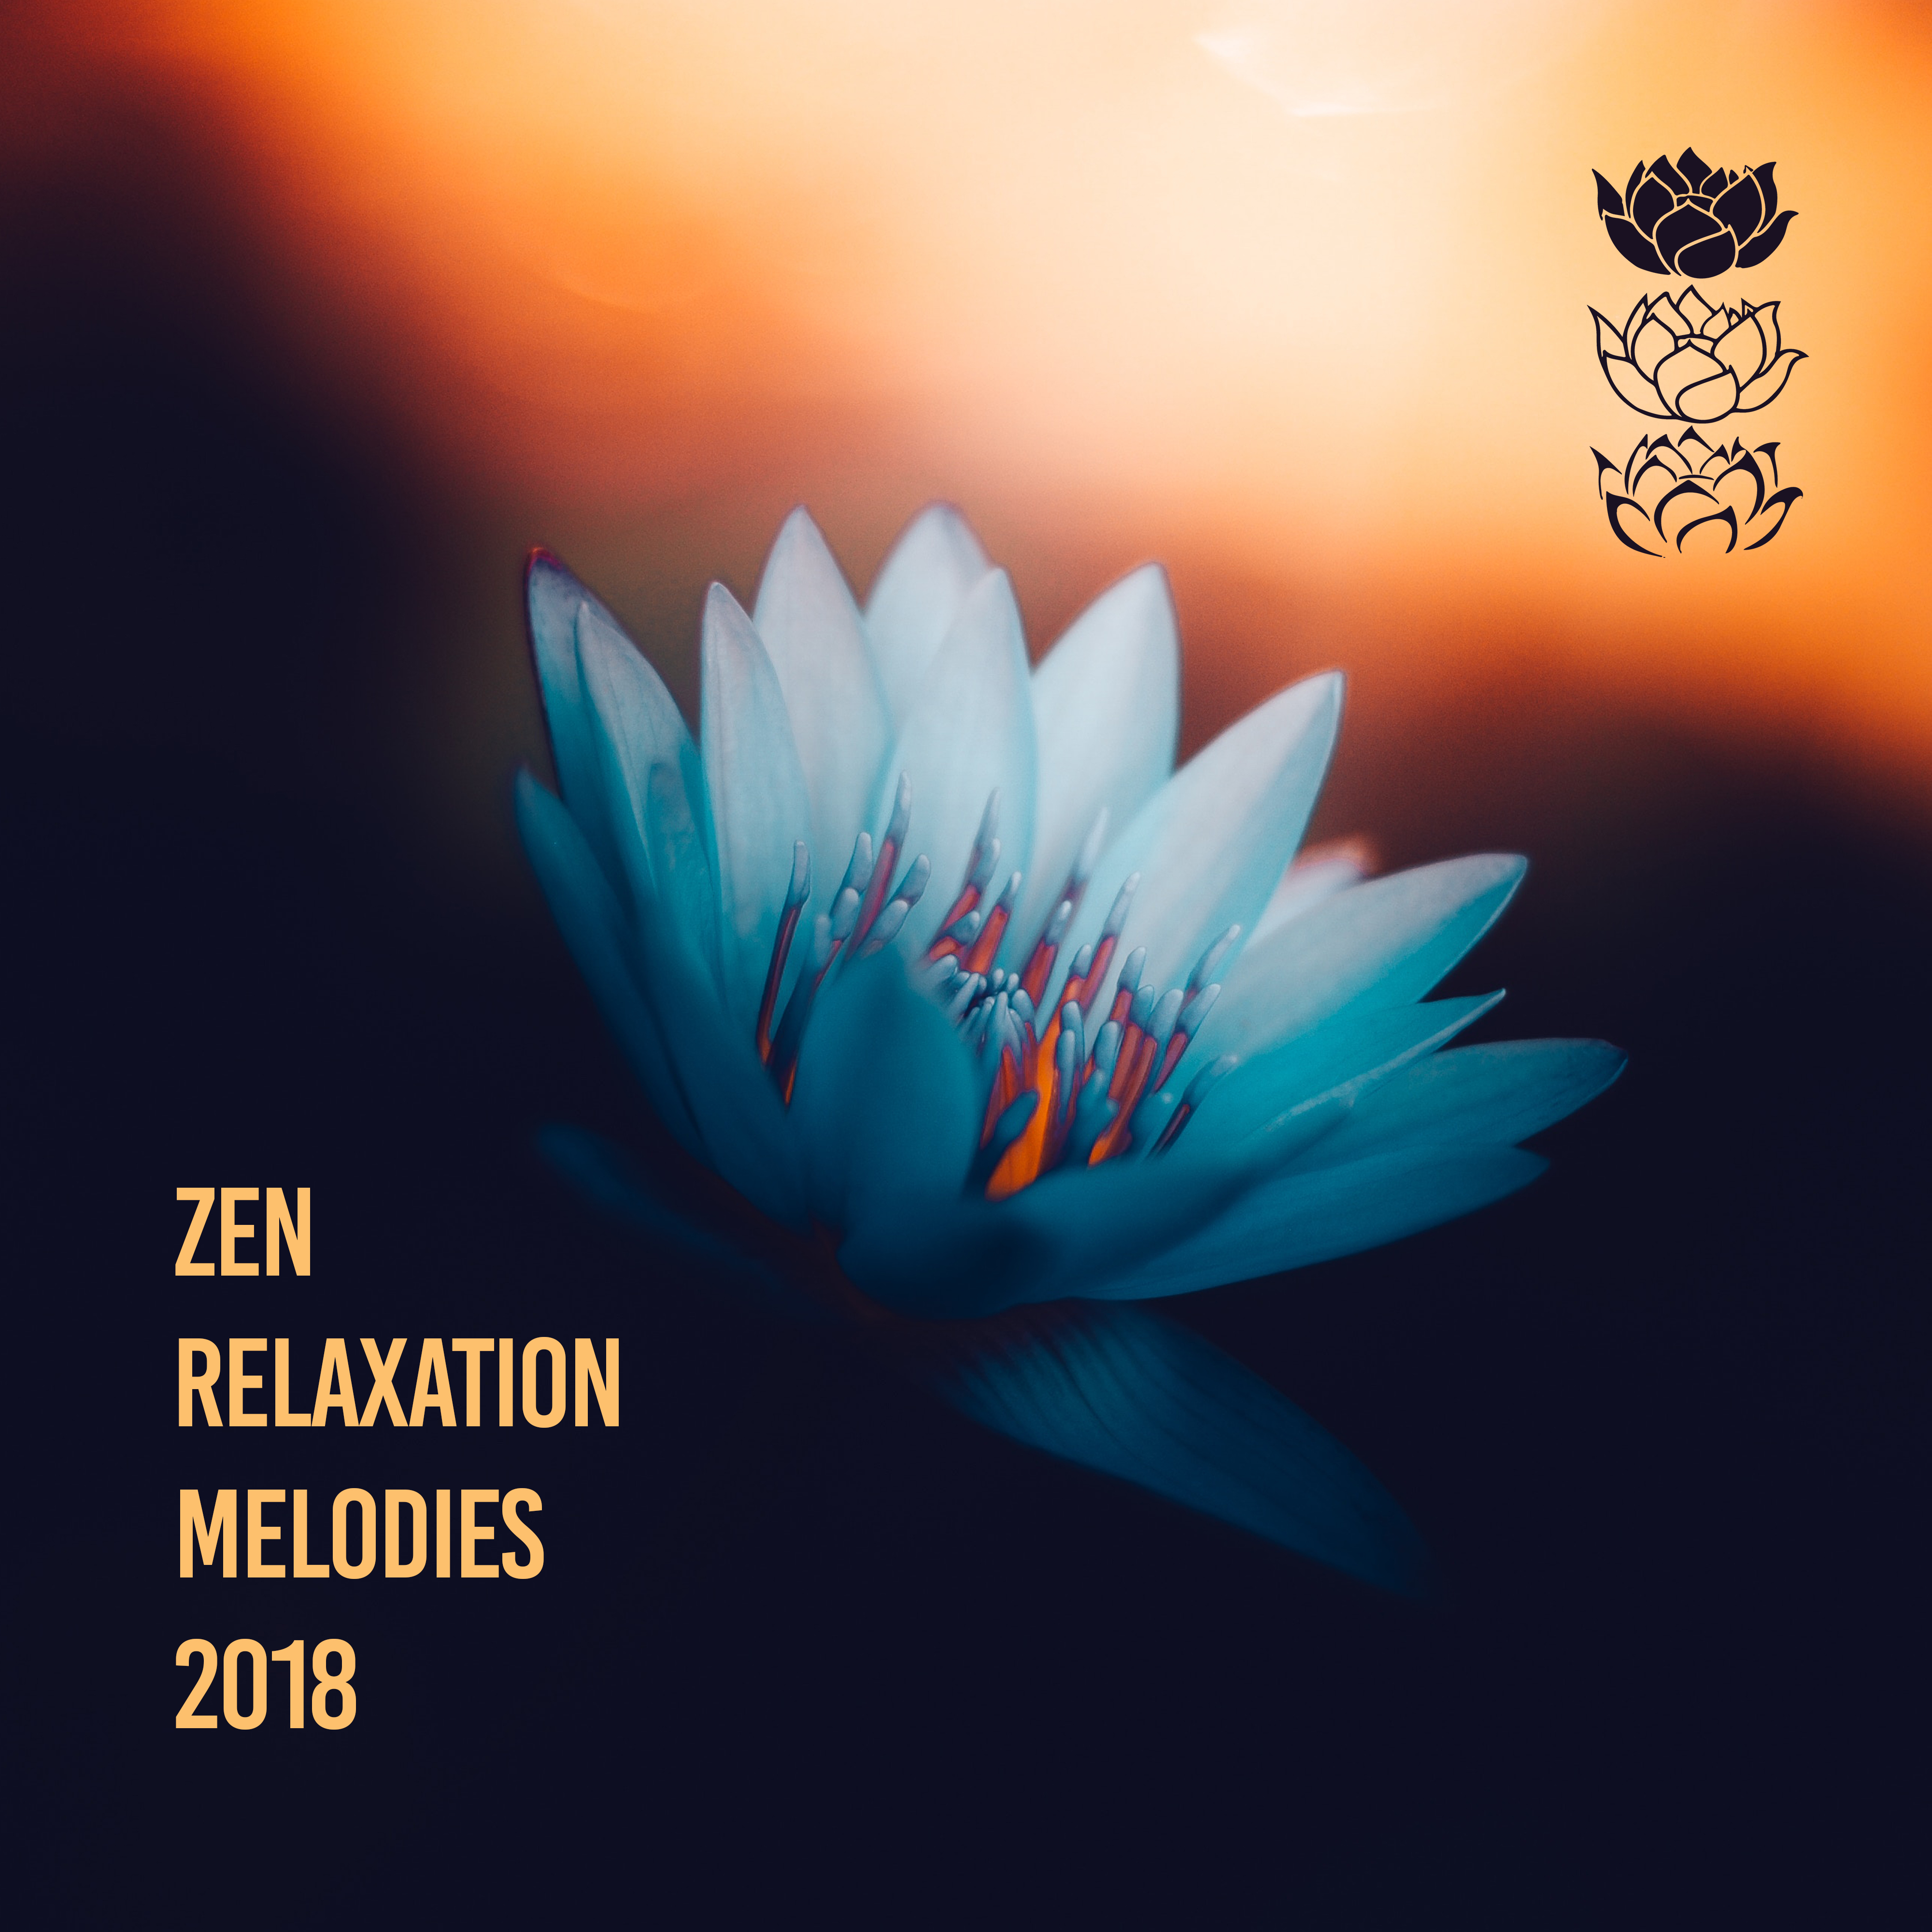 Zen Relaxation Melodies 2018